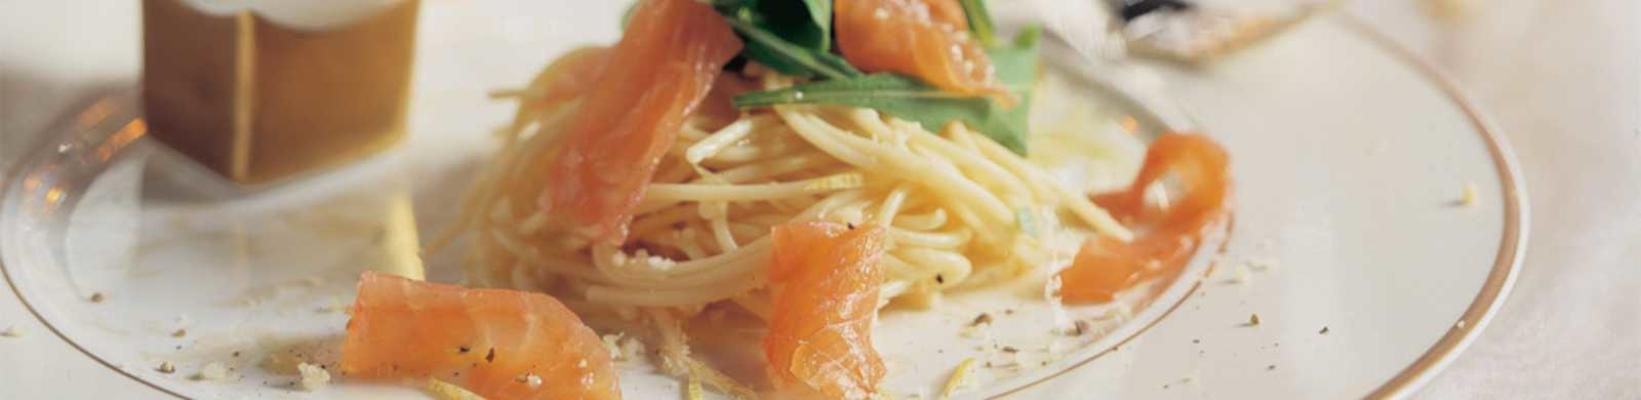 lemon spaghetti with arugula and salmon